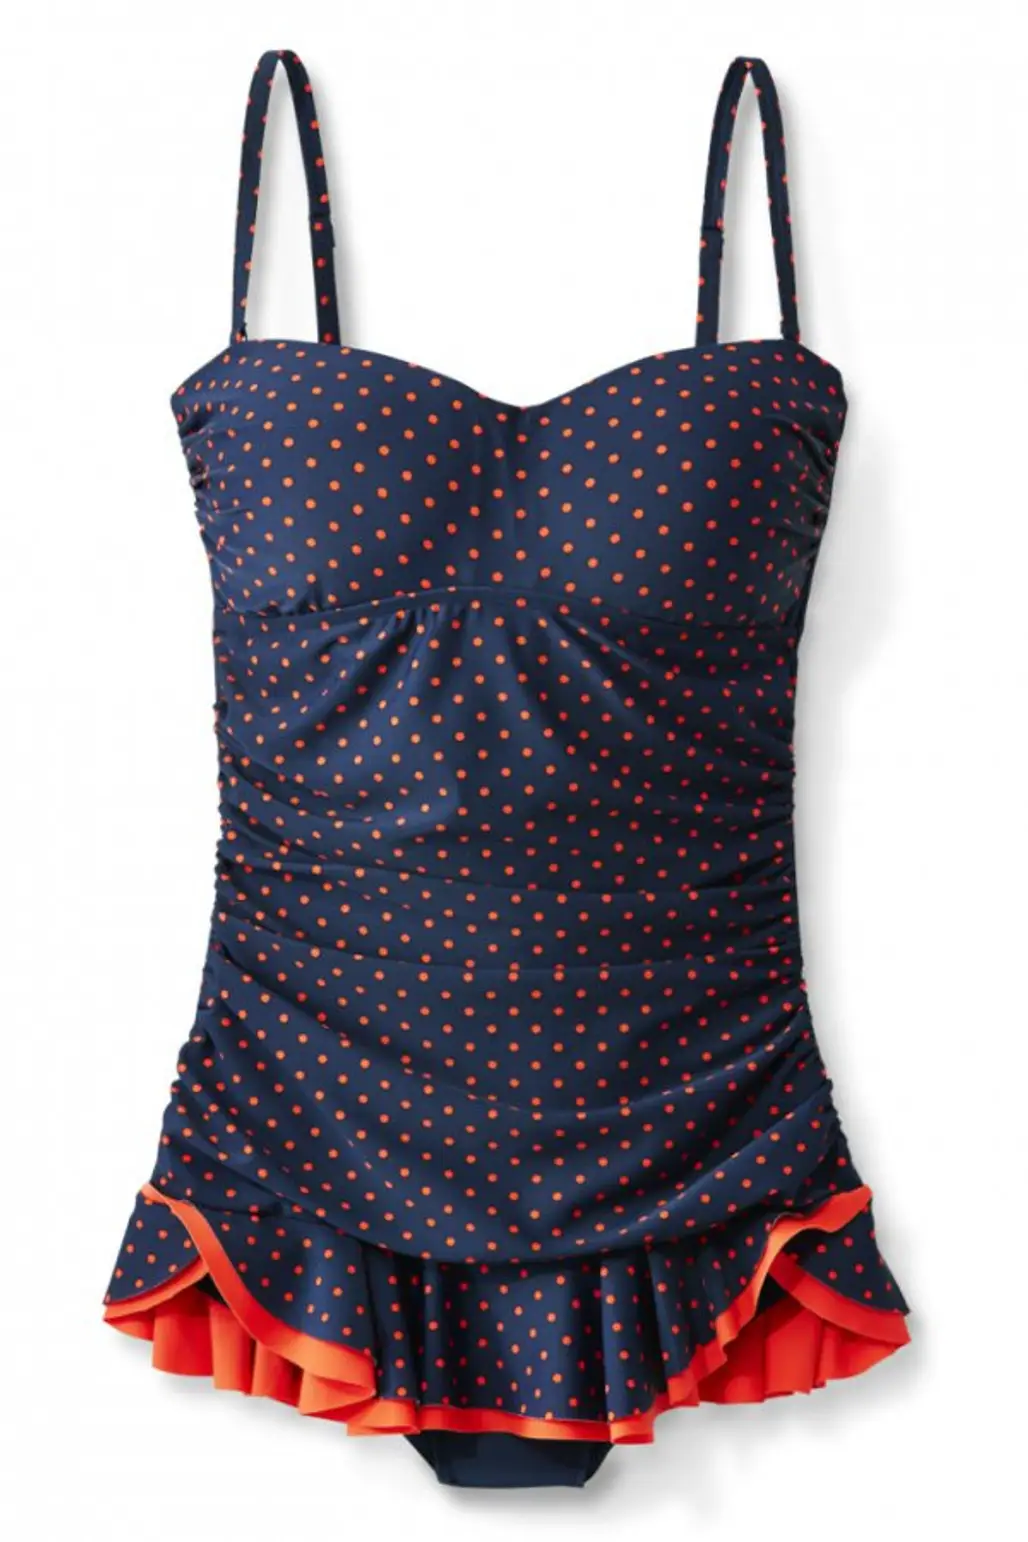 clothing, undergarment, one piece swimsuit, swimwear, pattern,